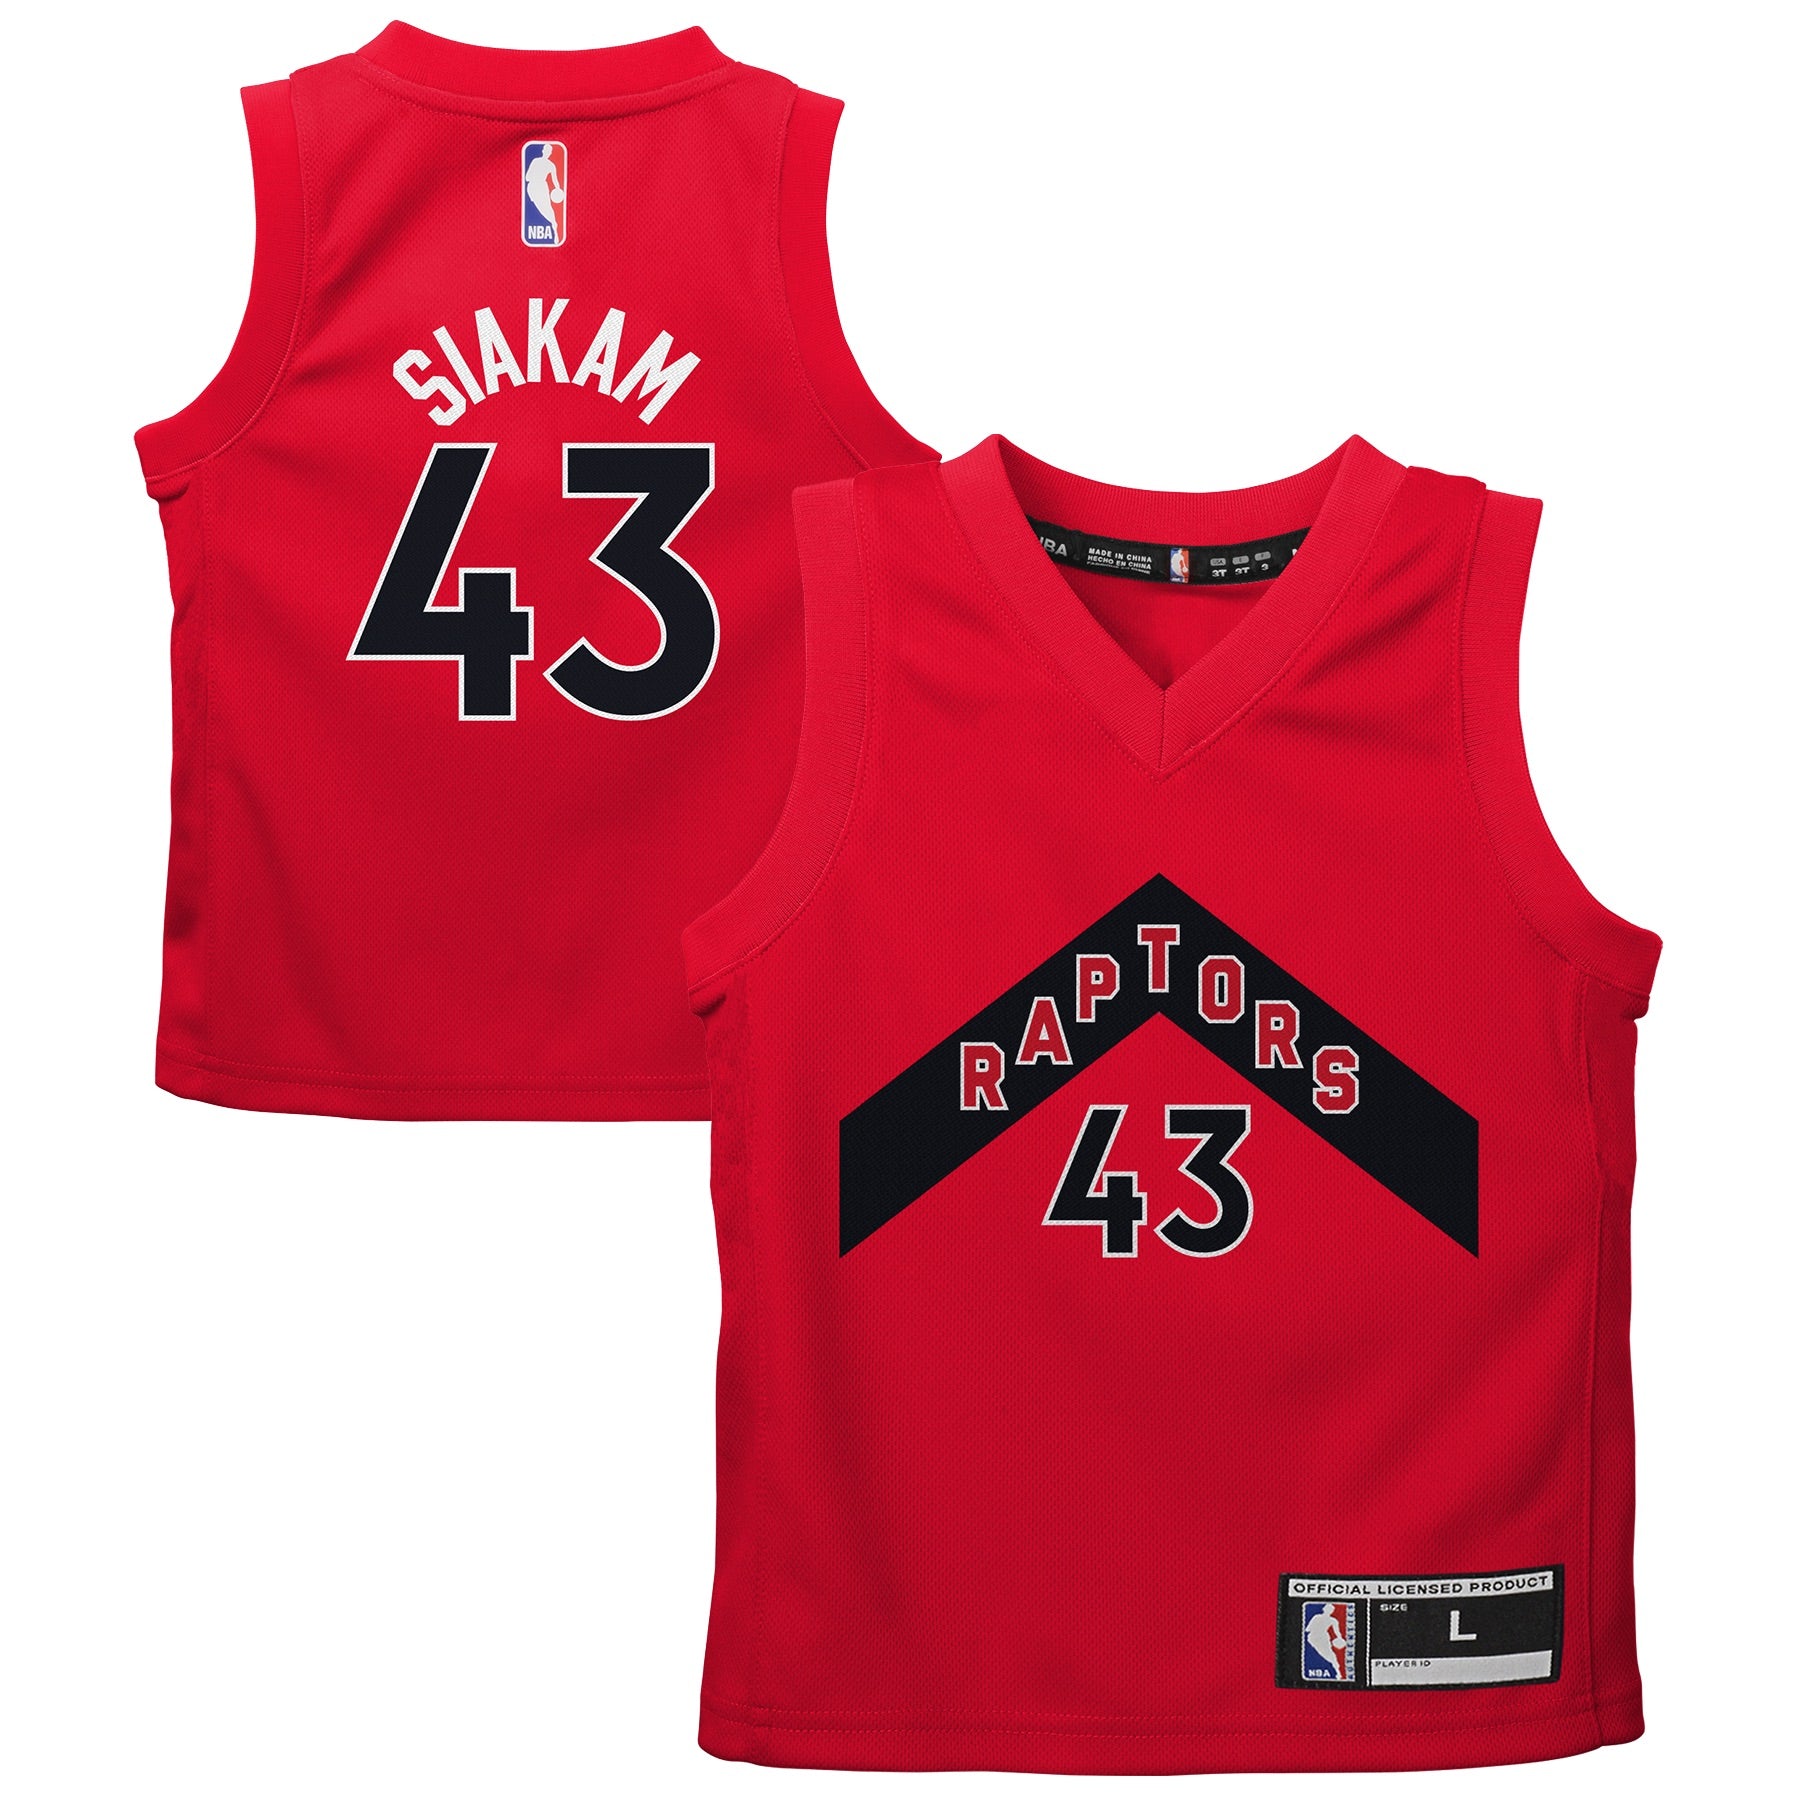 Unisex Nike Pascal Siakam Red Toronto Raptors Swingman Jersey - Icon Edition Size: Small